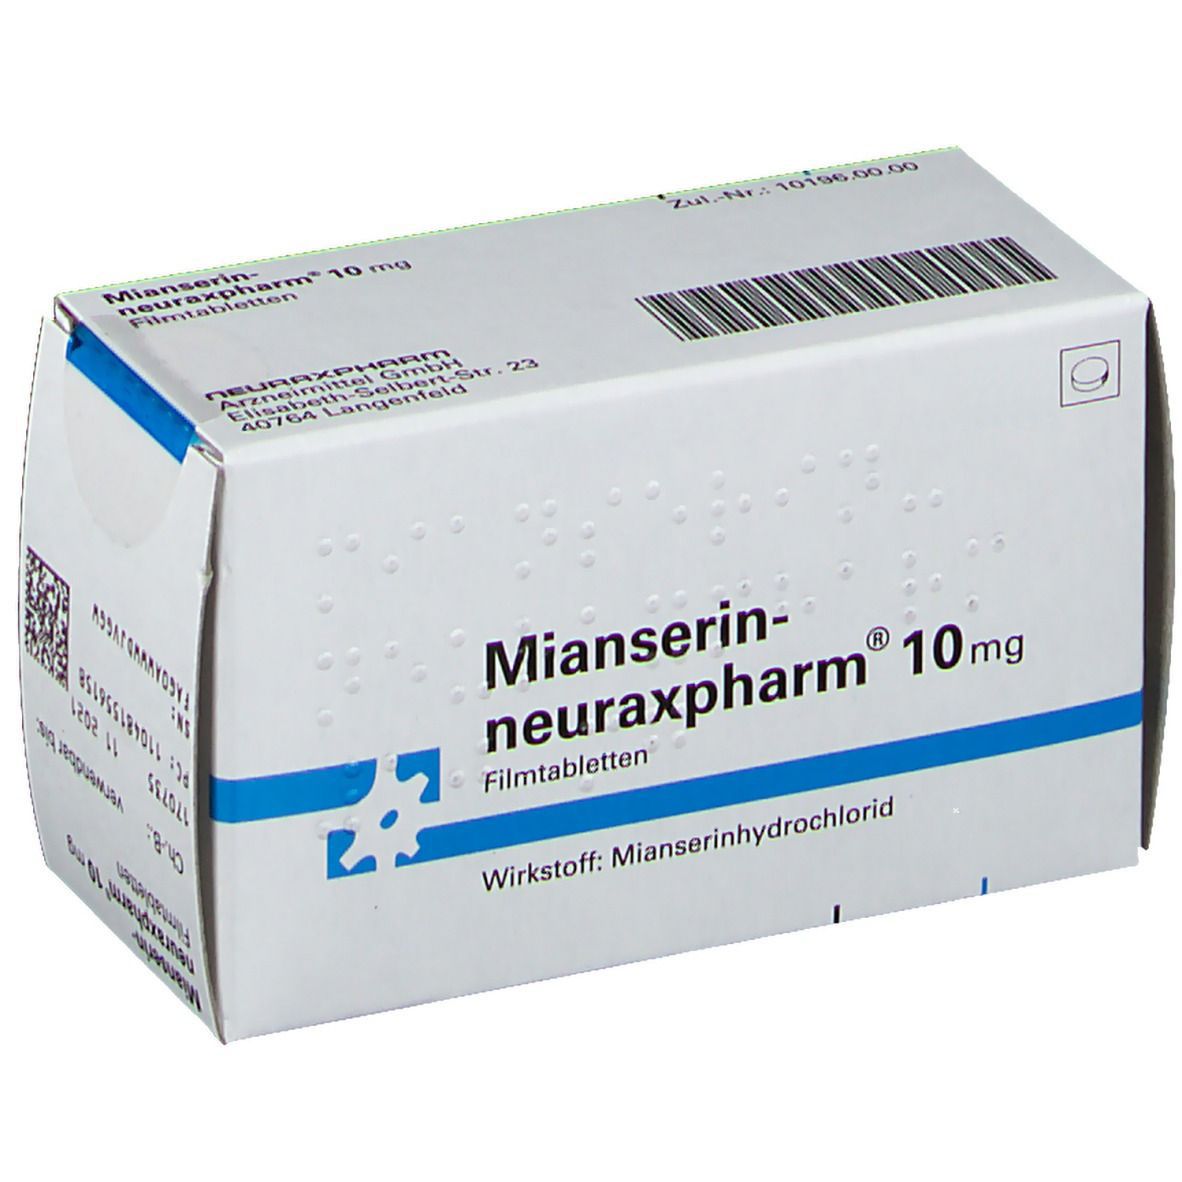 Mianserin-neuraxpharm® 10 mg